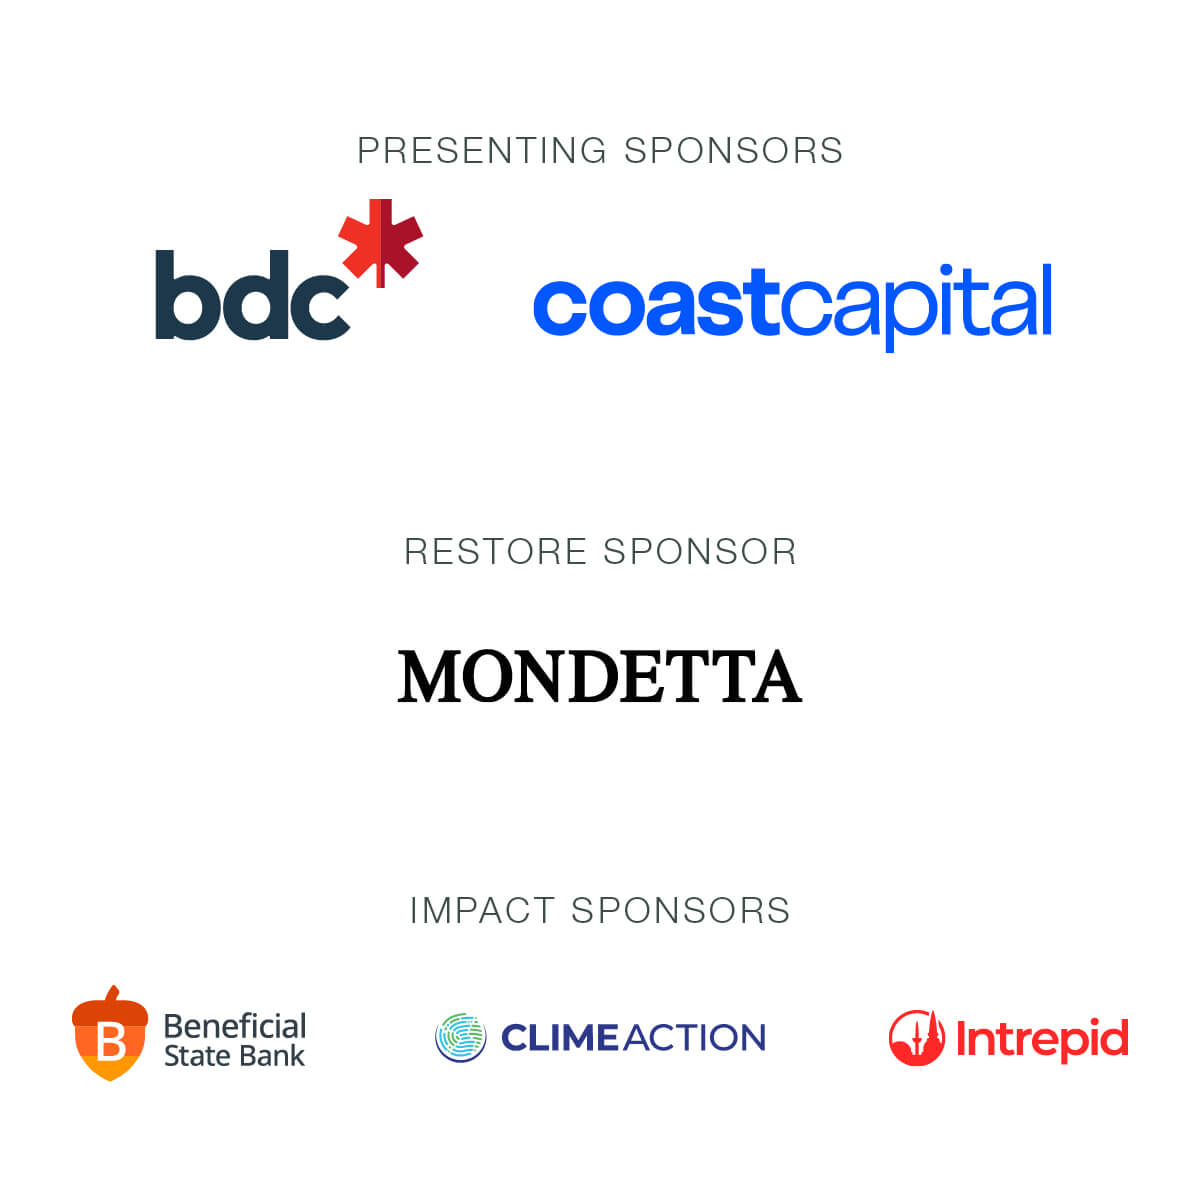 Presenting Sponsors: BDC, Coast Capital – Restore Sponsor: Mondetta – Impact Sponsors: Beneficial State Bank, Climeaction, Intrepid Travel